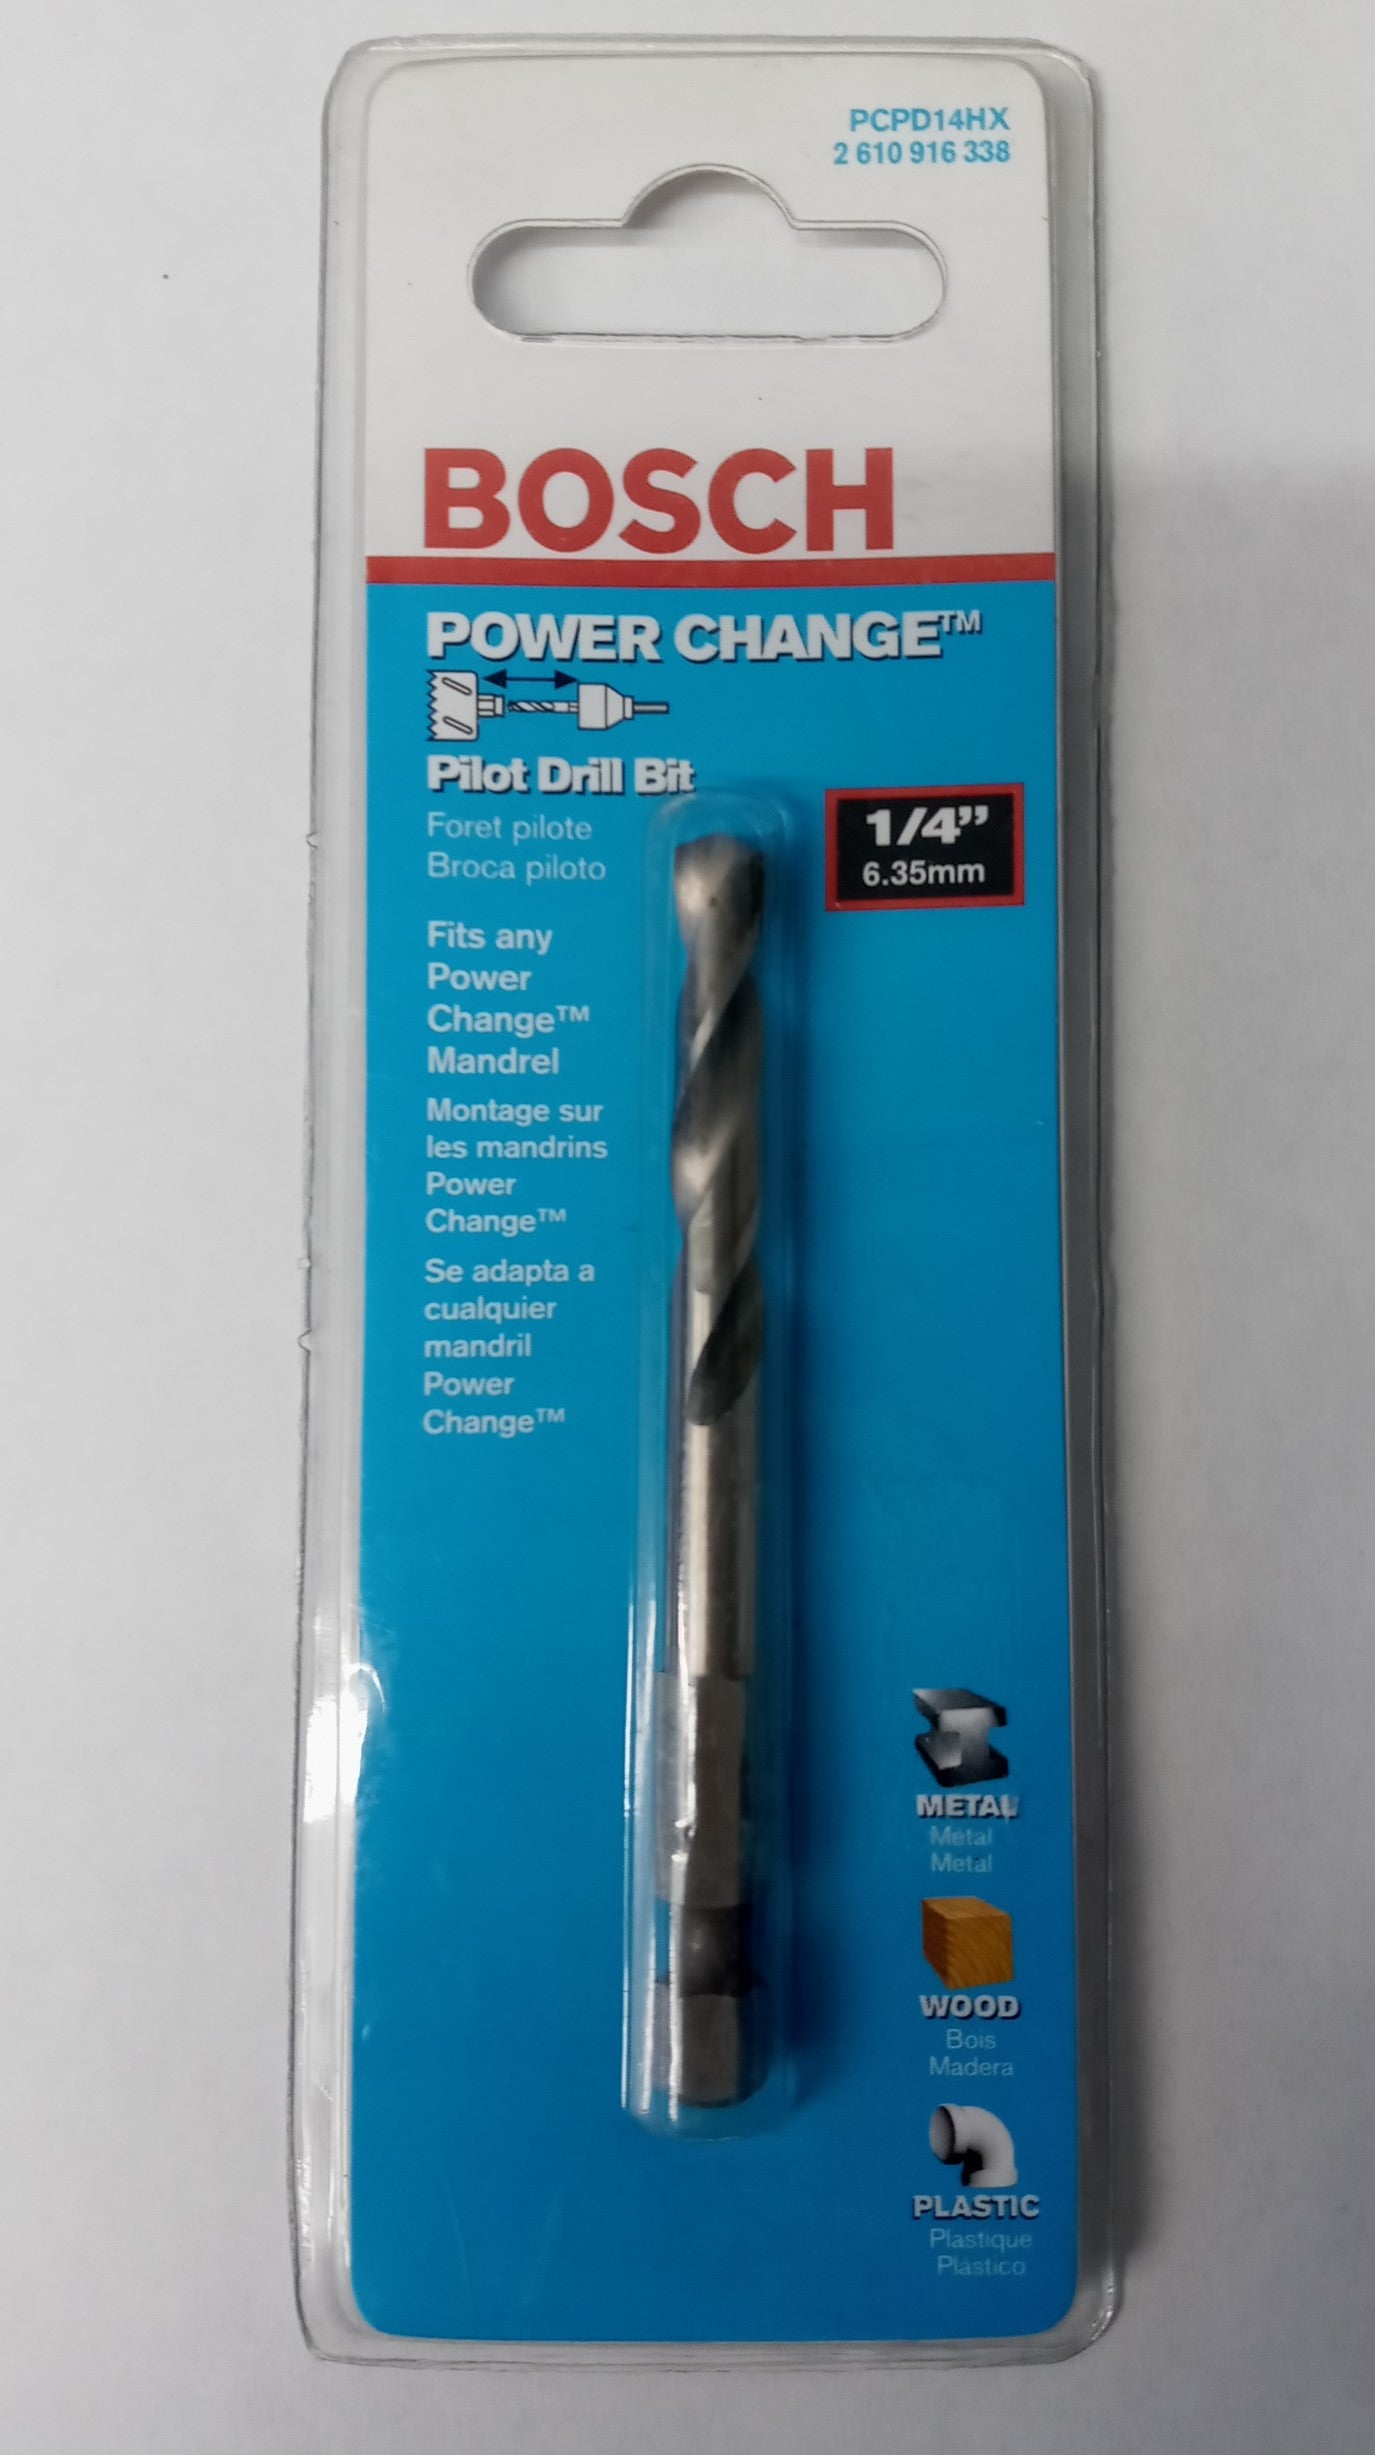 Bosch PCPD14HX 1/4" Power Change Pilot Drill Bit